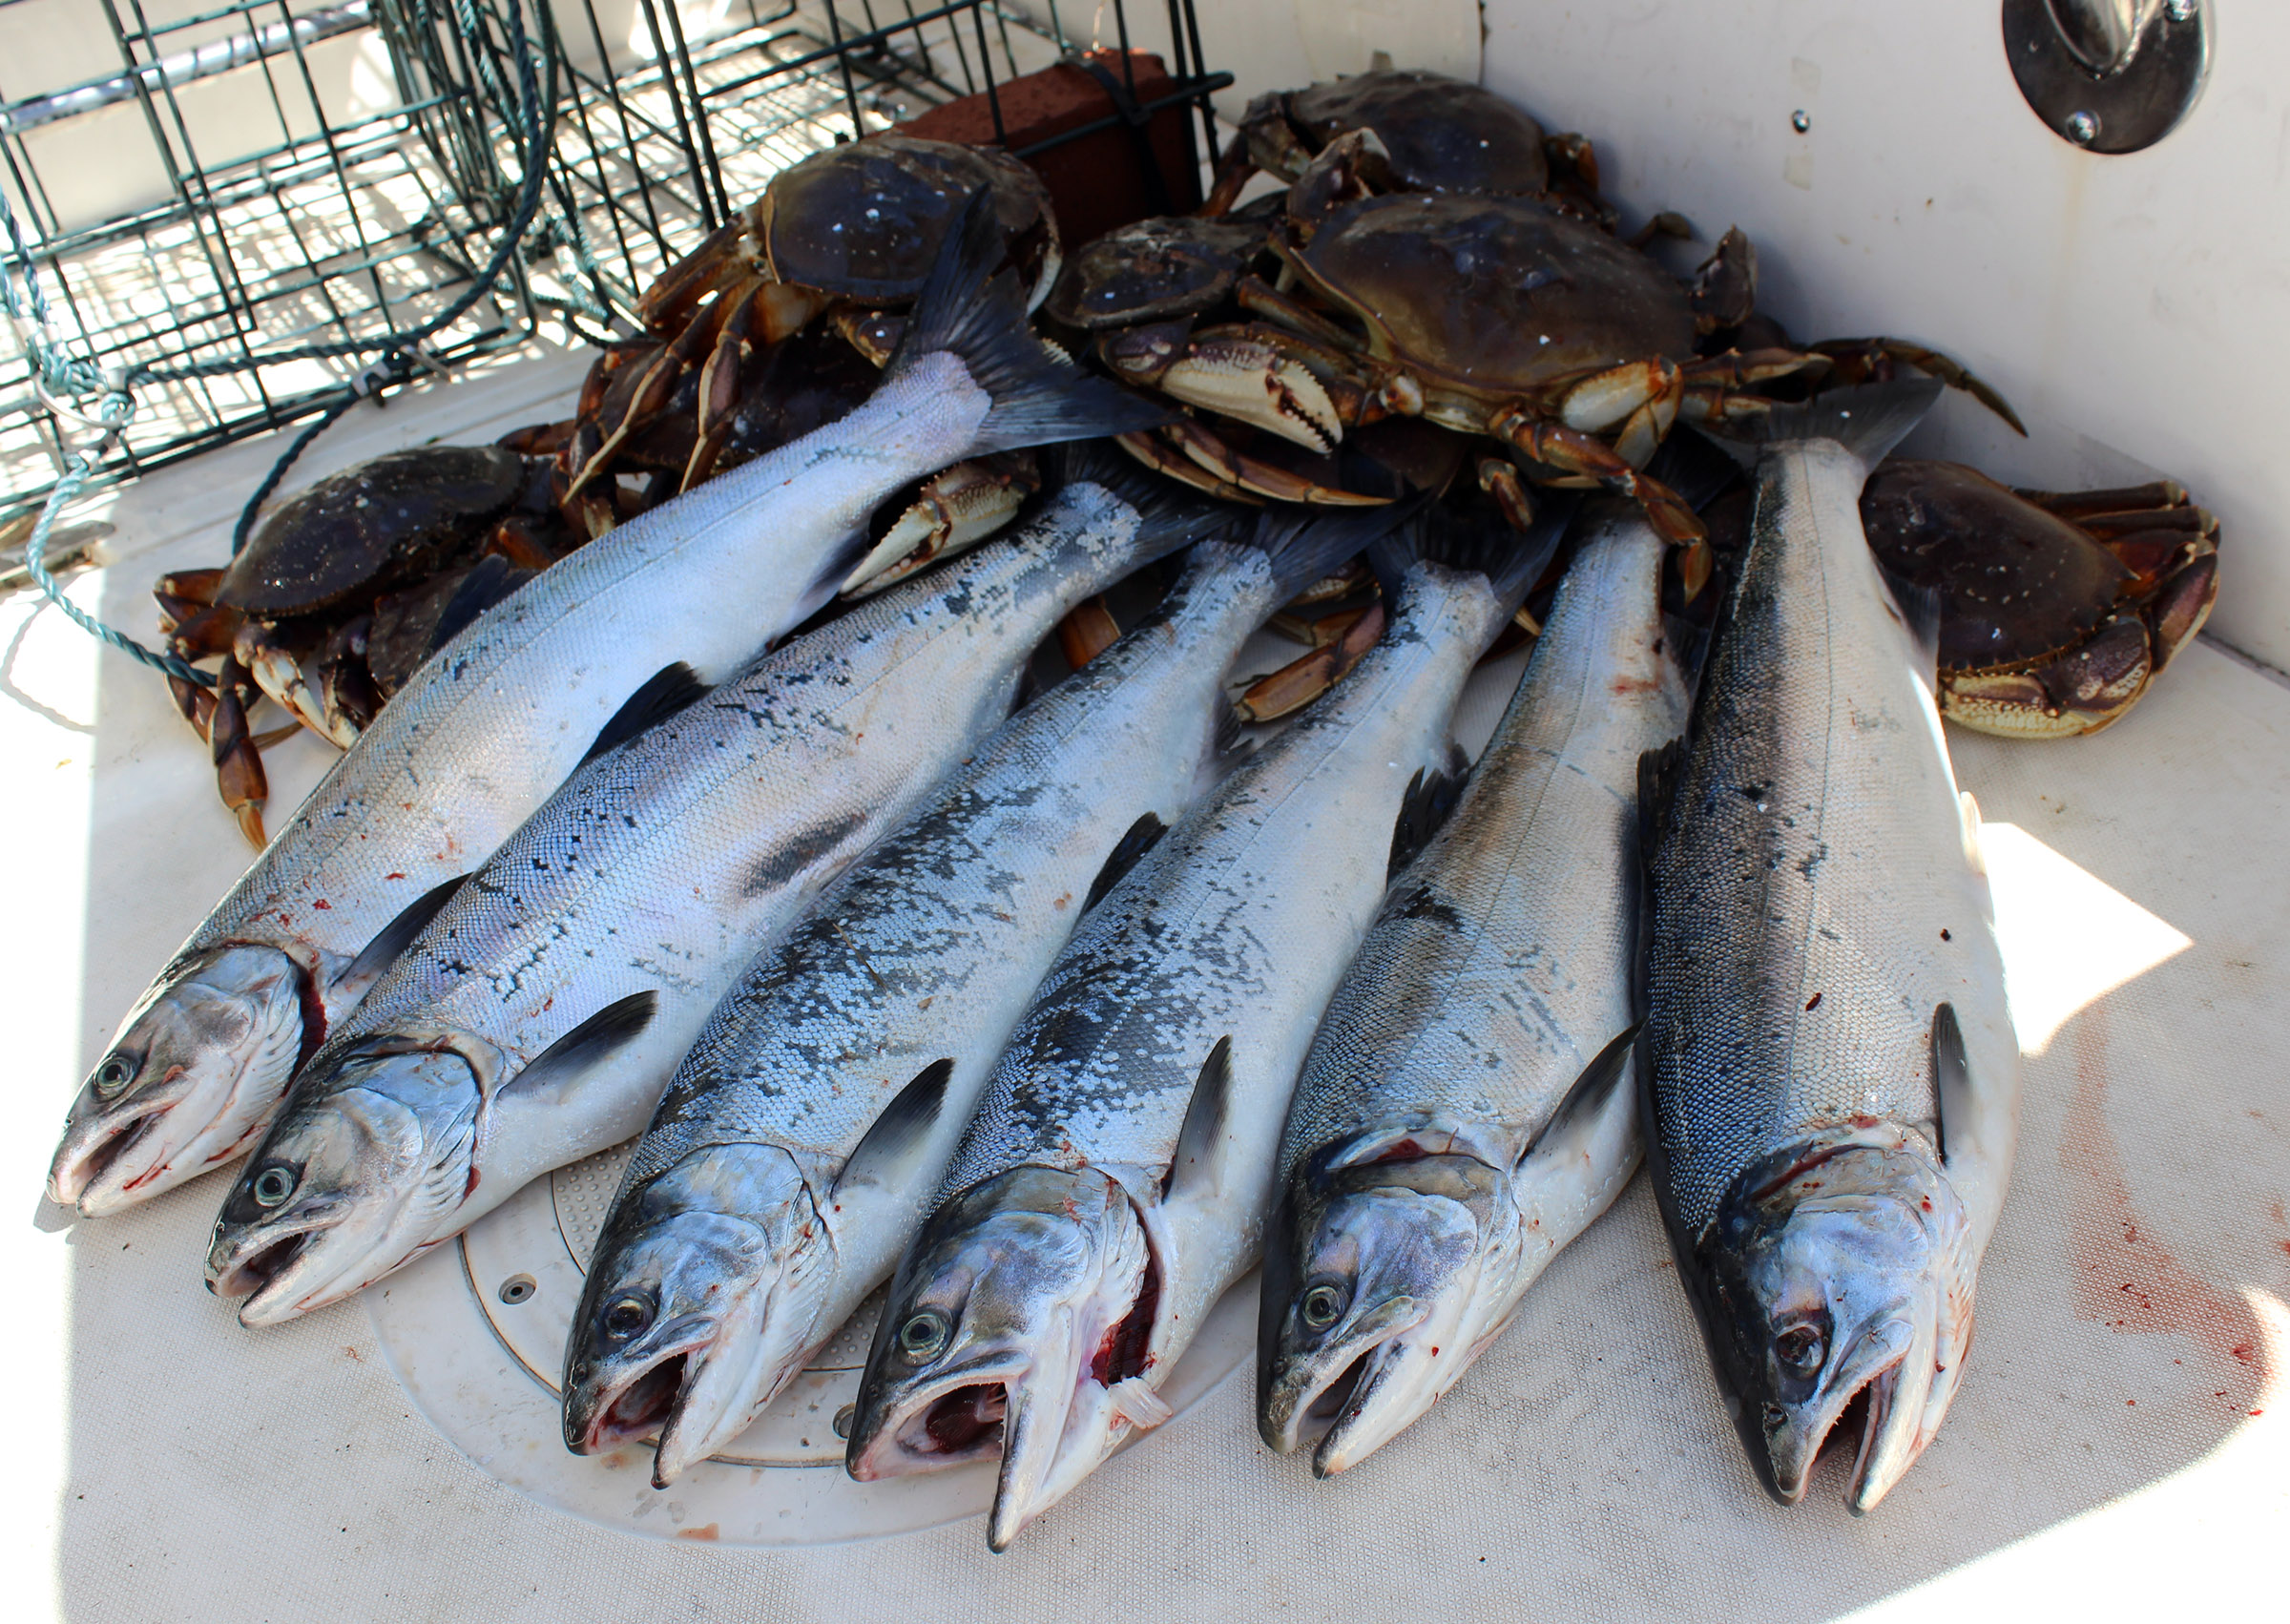 Jeff Head Salmon Fishing & Bainbridge Crabbing